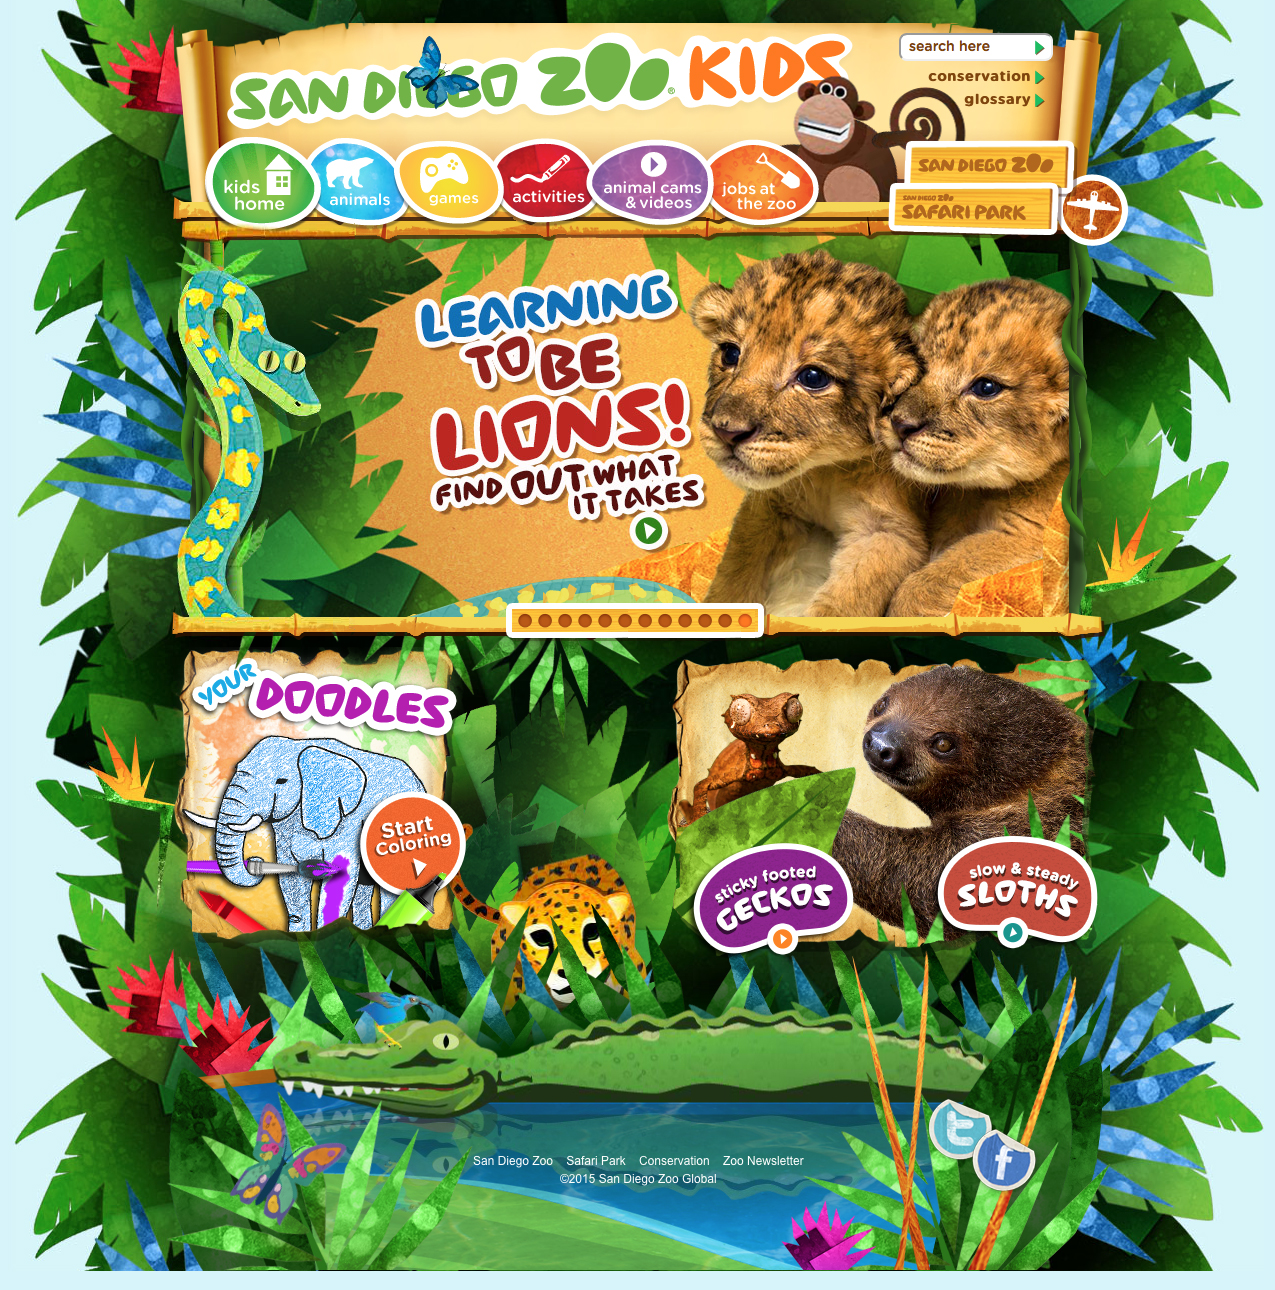 San Diego Zoo Kids website